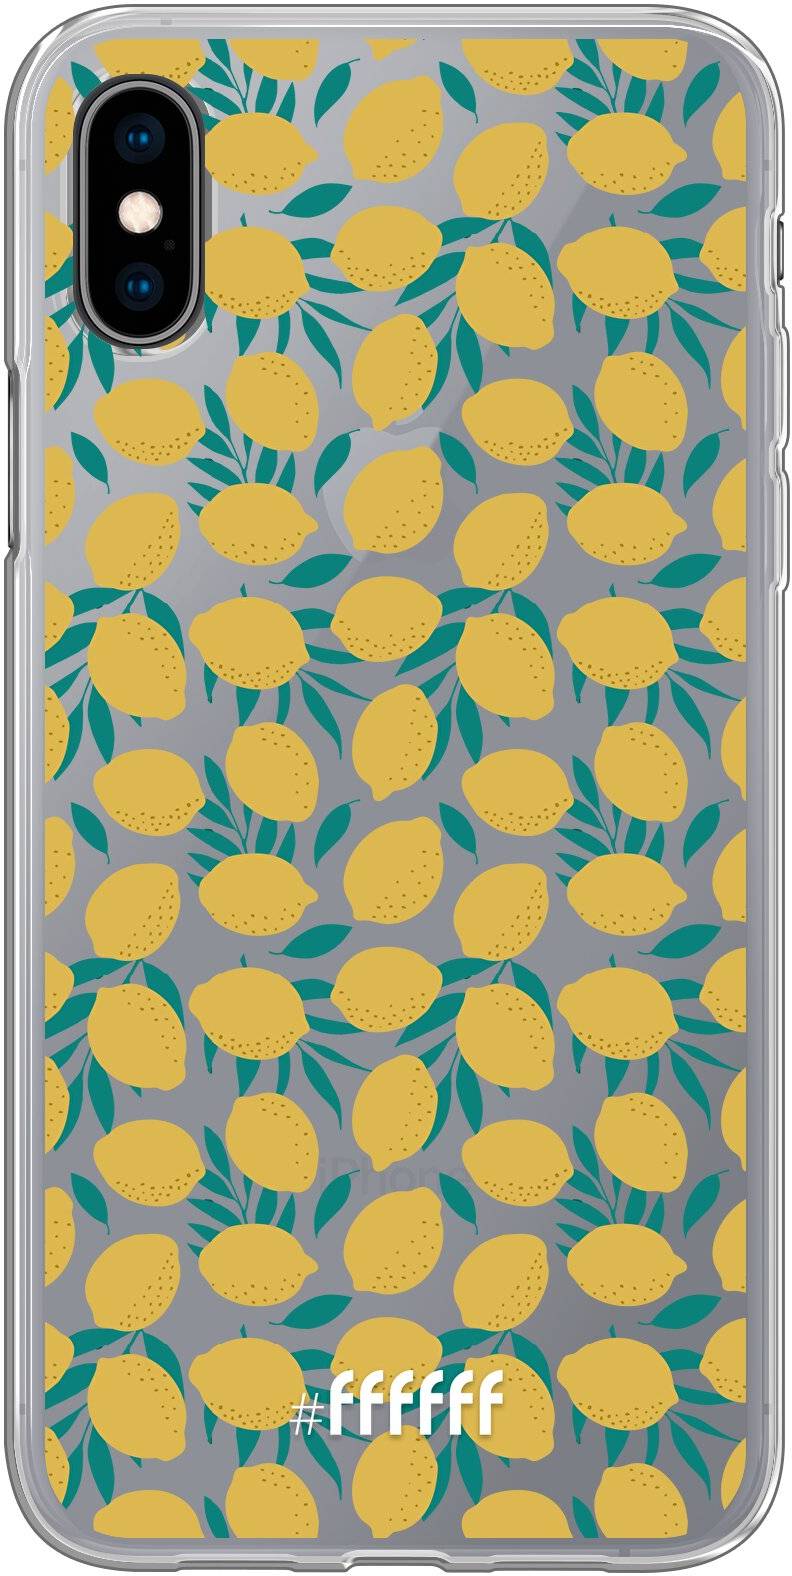 Lemons iPhone X